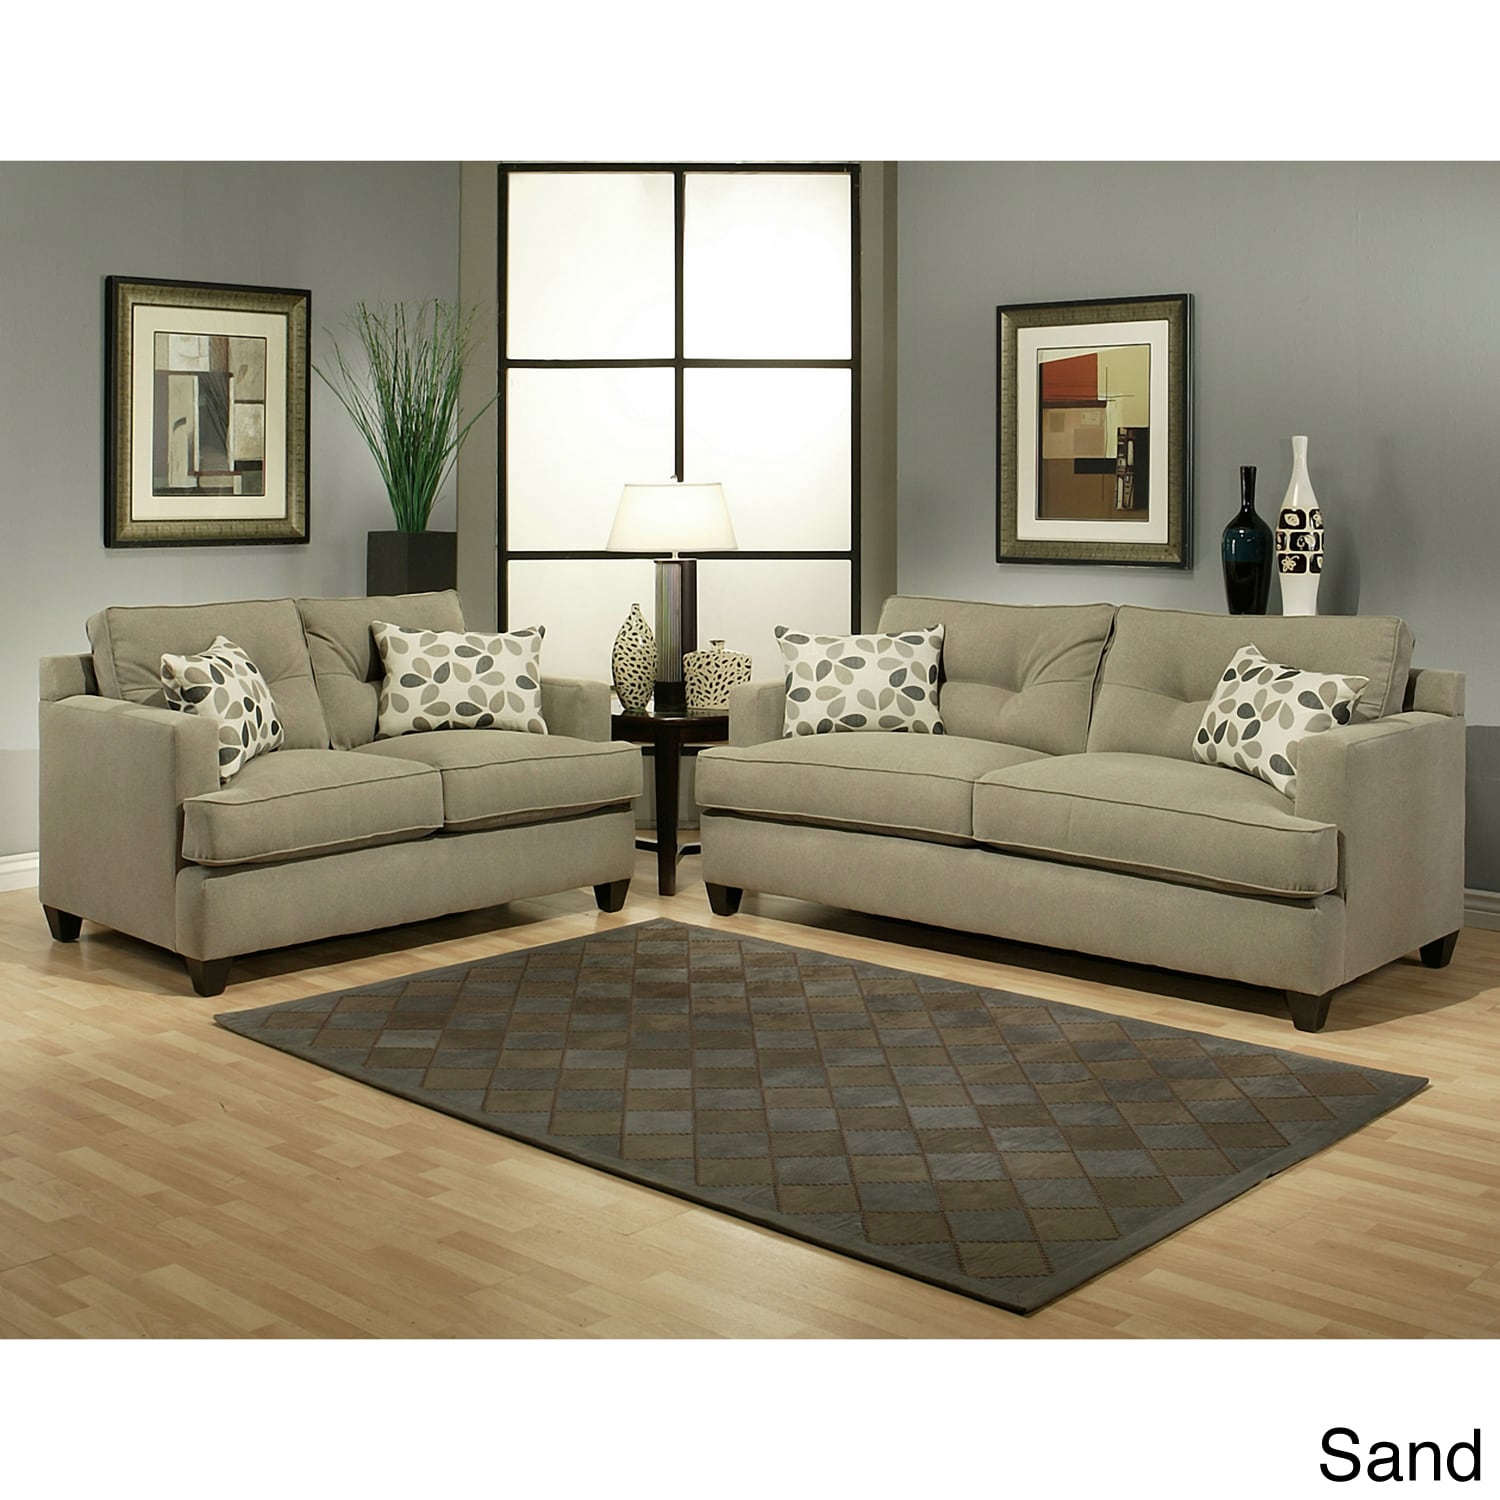 Furniture Of America Nicolas 2 piece Micro denier Fabric Sofa And Loveseat Set